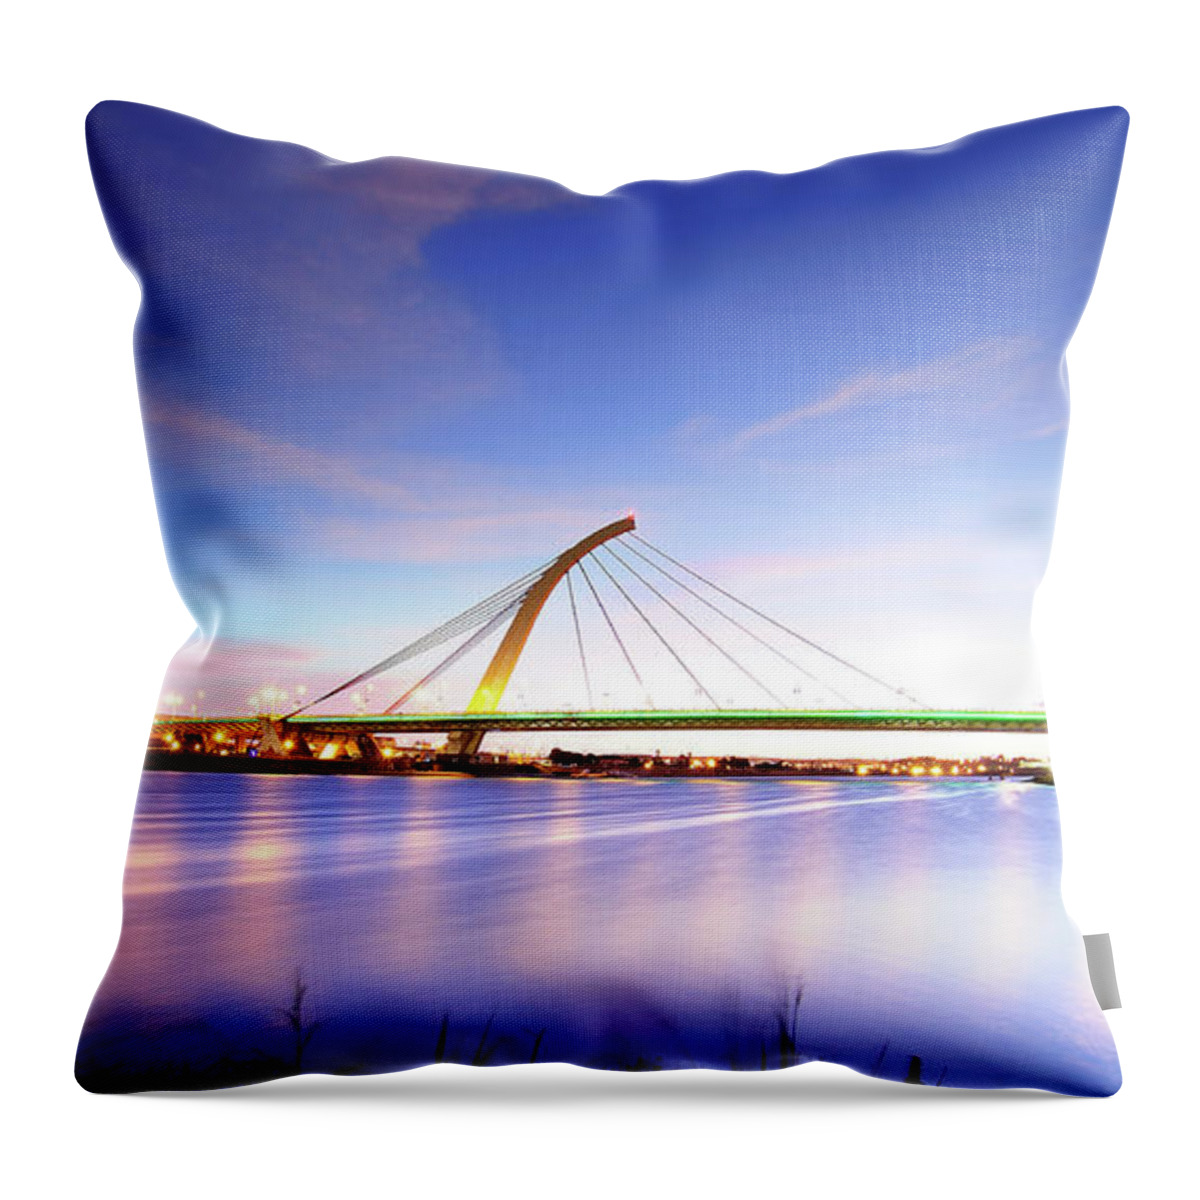 Grass Throw Pillow featuring the photograph Blue Hour, Dazhi Bridge by Copyright Of Eason Lin Ladaga